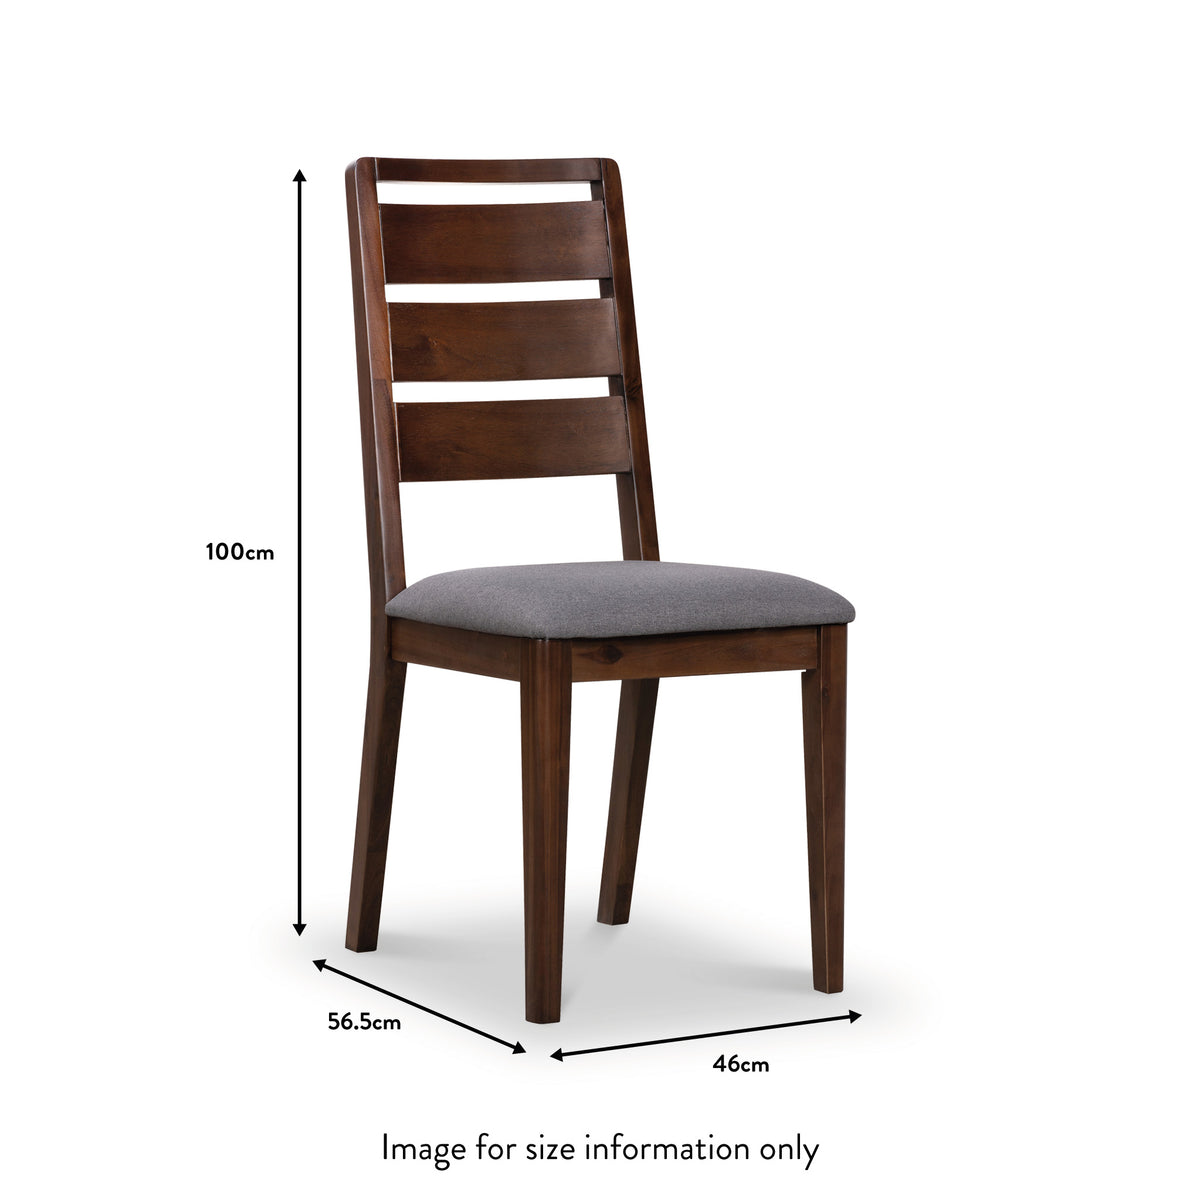 Oskar Ladder Back Dining Chair dimensions